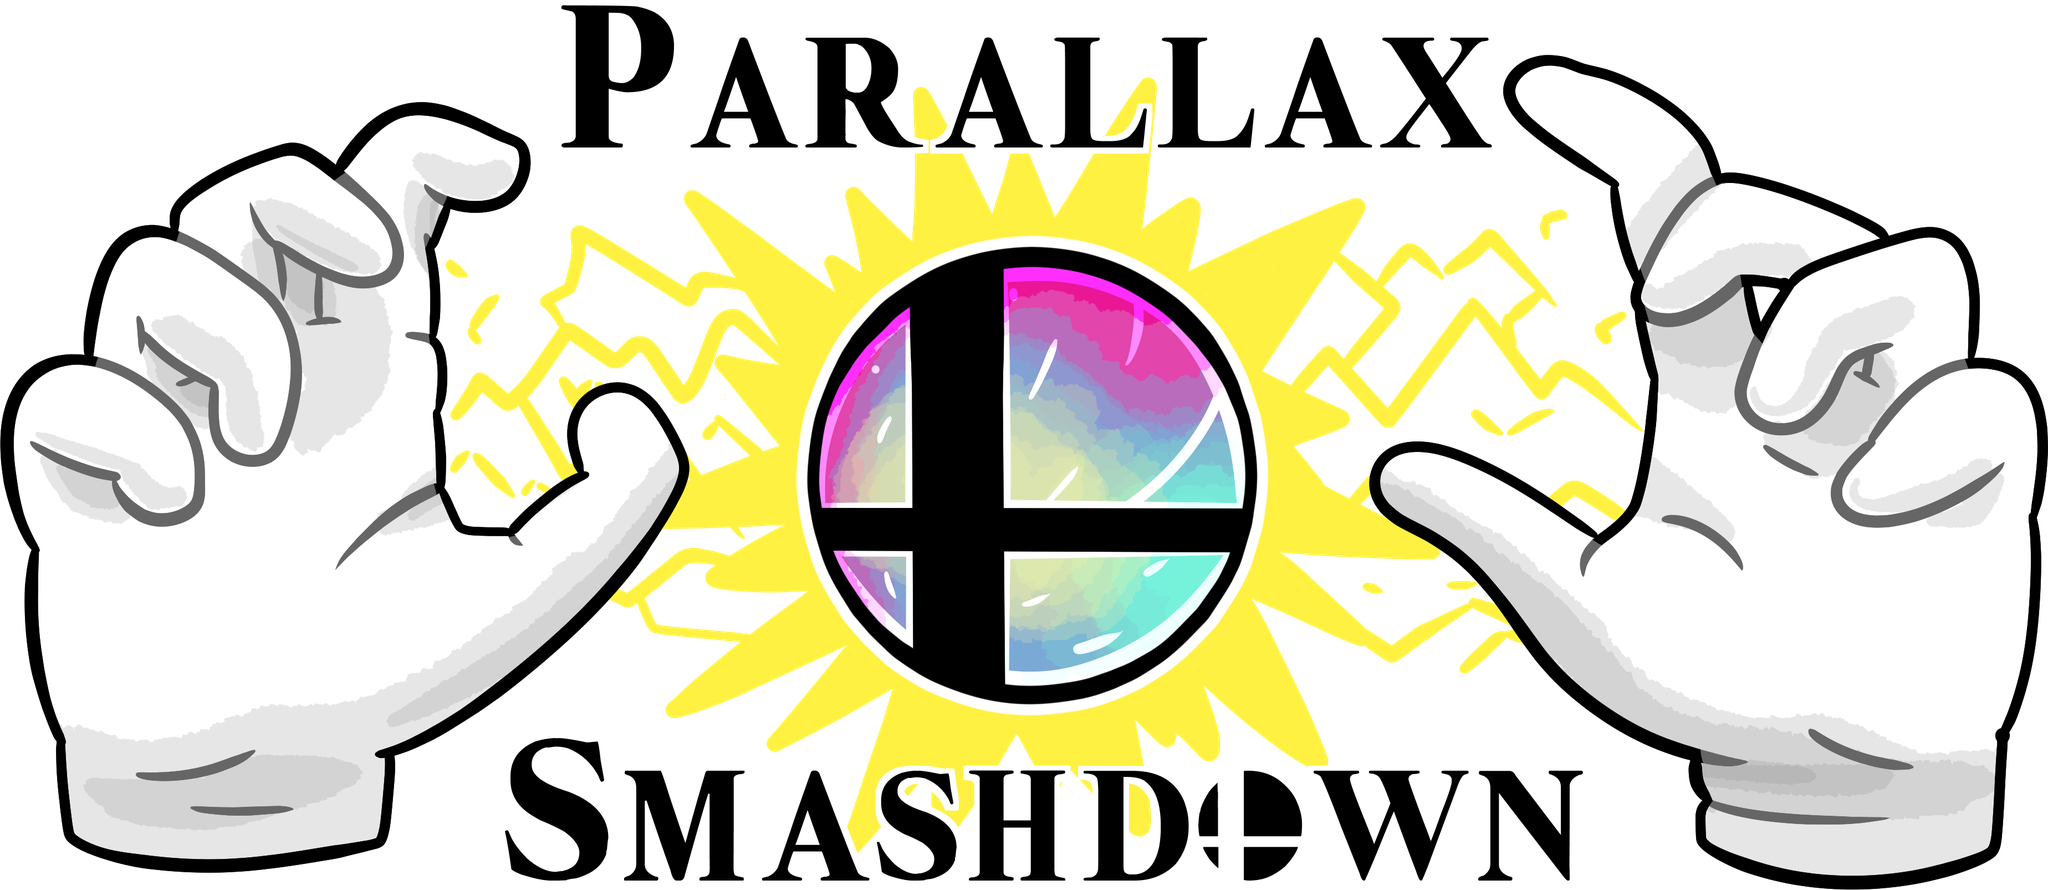 parallax-smash-down-super-smash-brothers-tournament